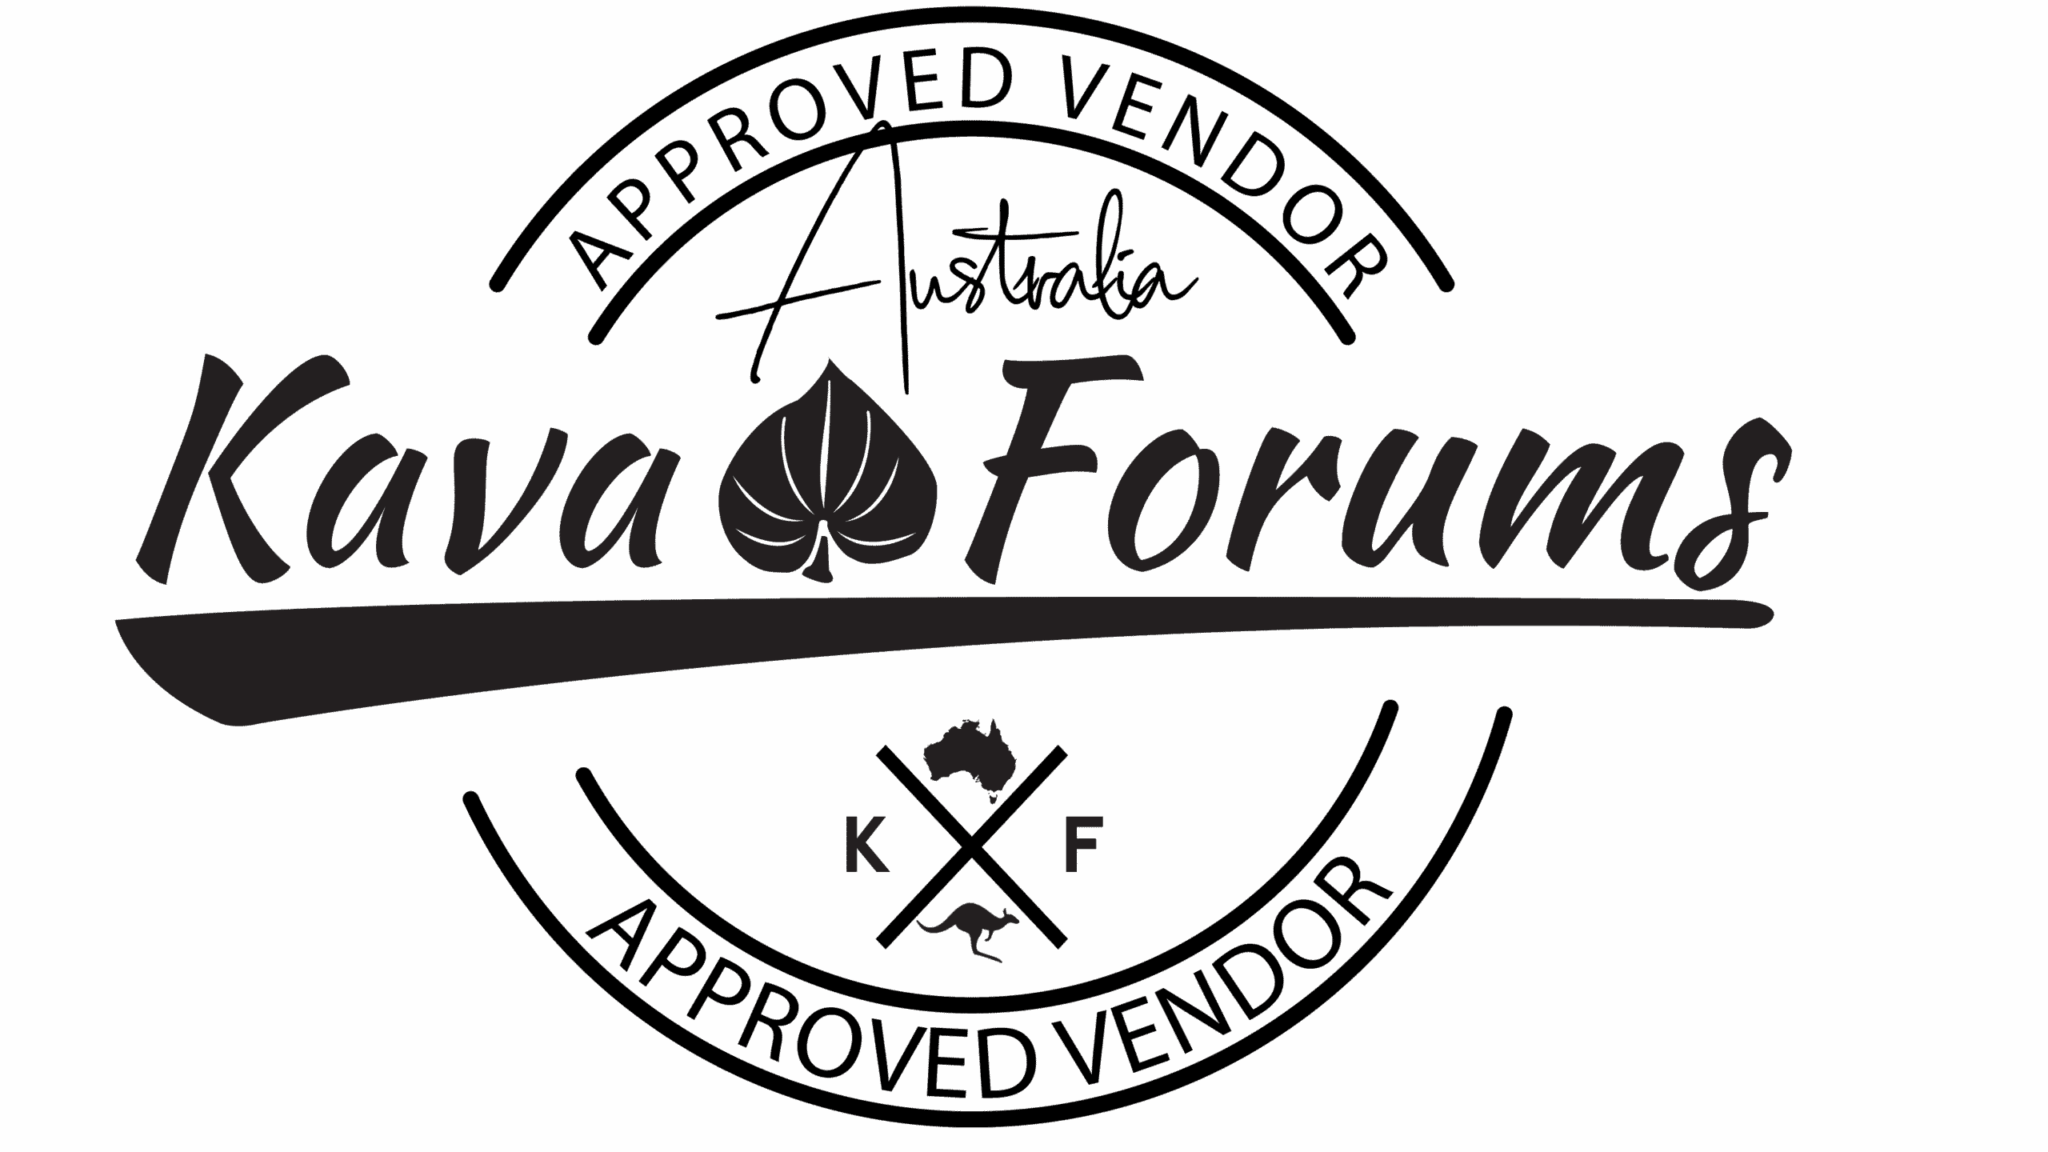 buy kava online kava forums